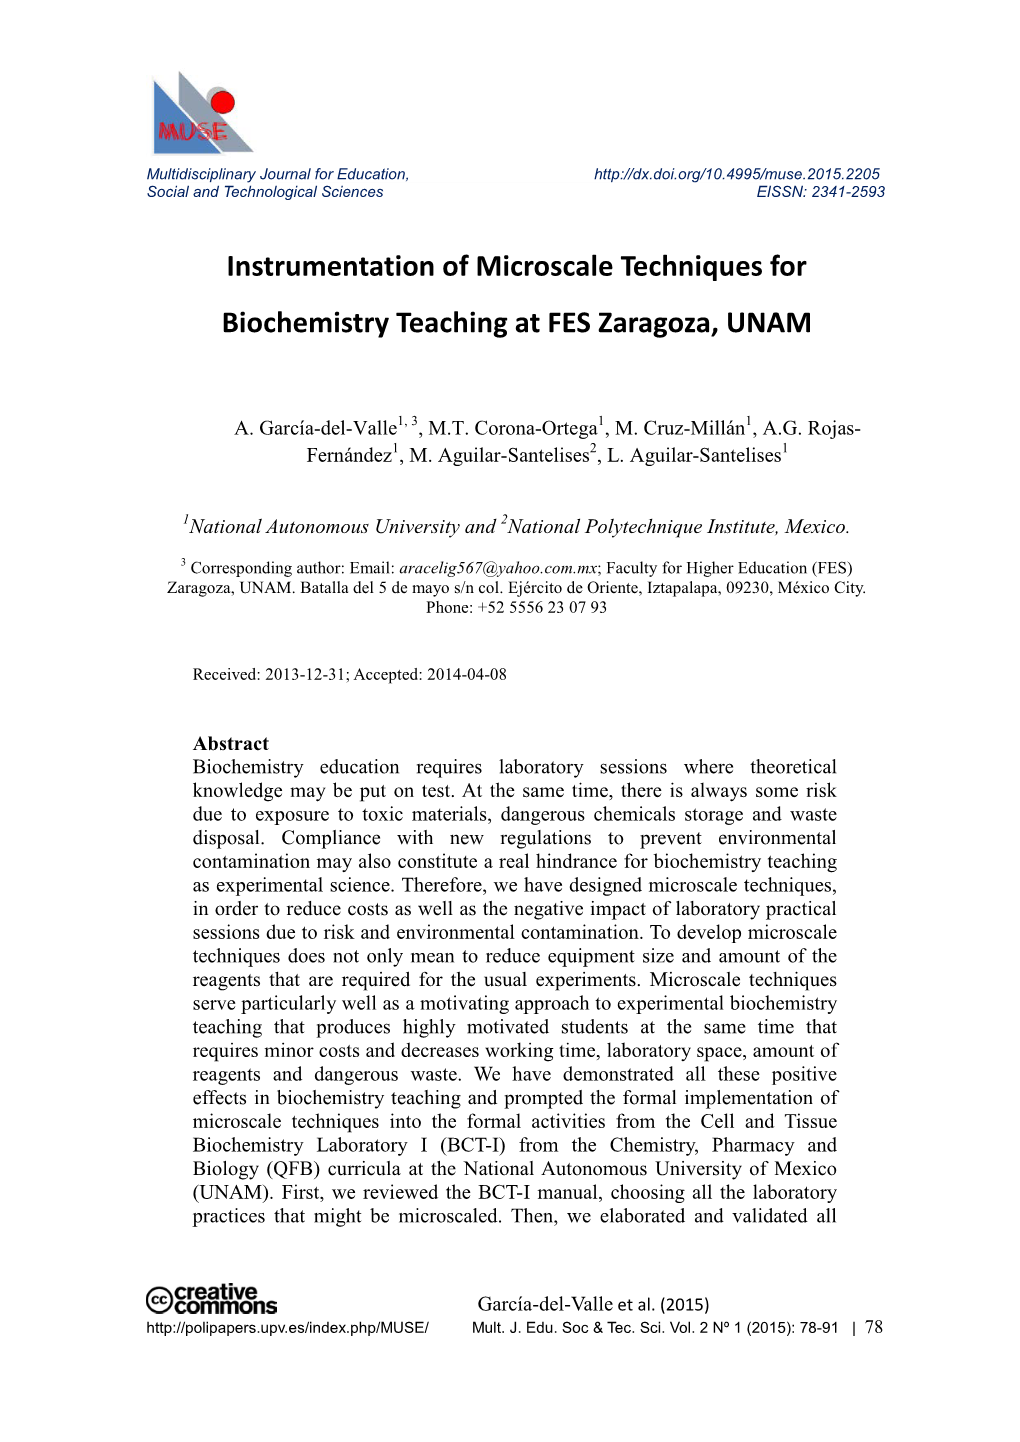 Instrumentation of Microscale Techniques for Biochemistry Teaching at FES Zaragoza, UNAM